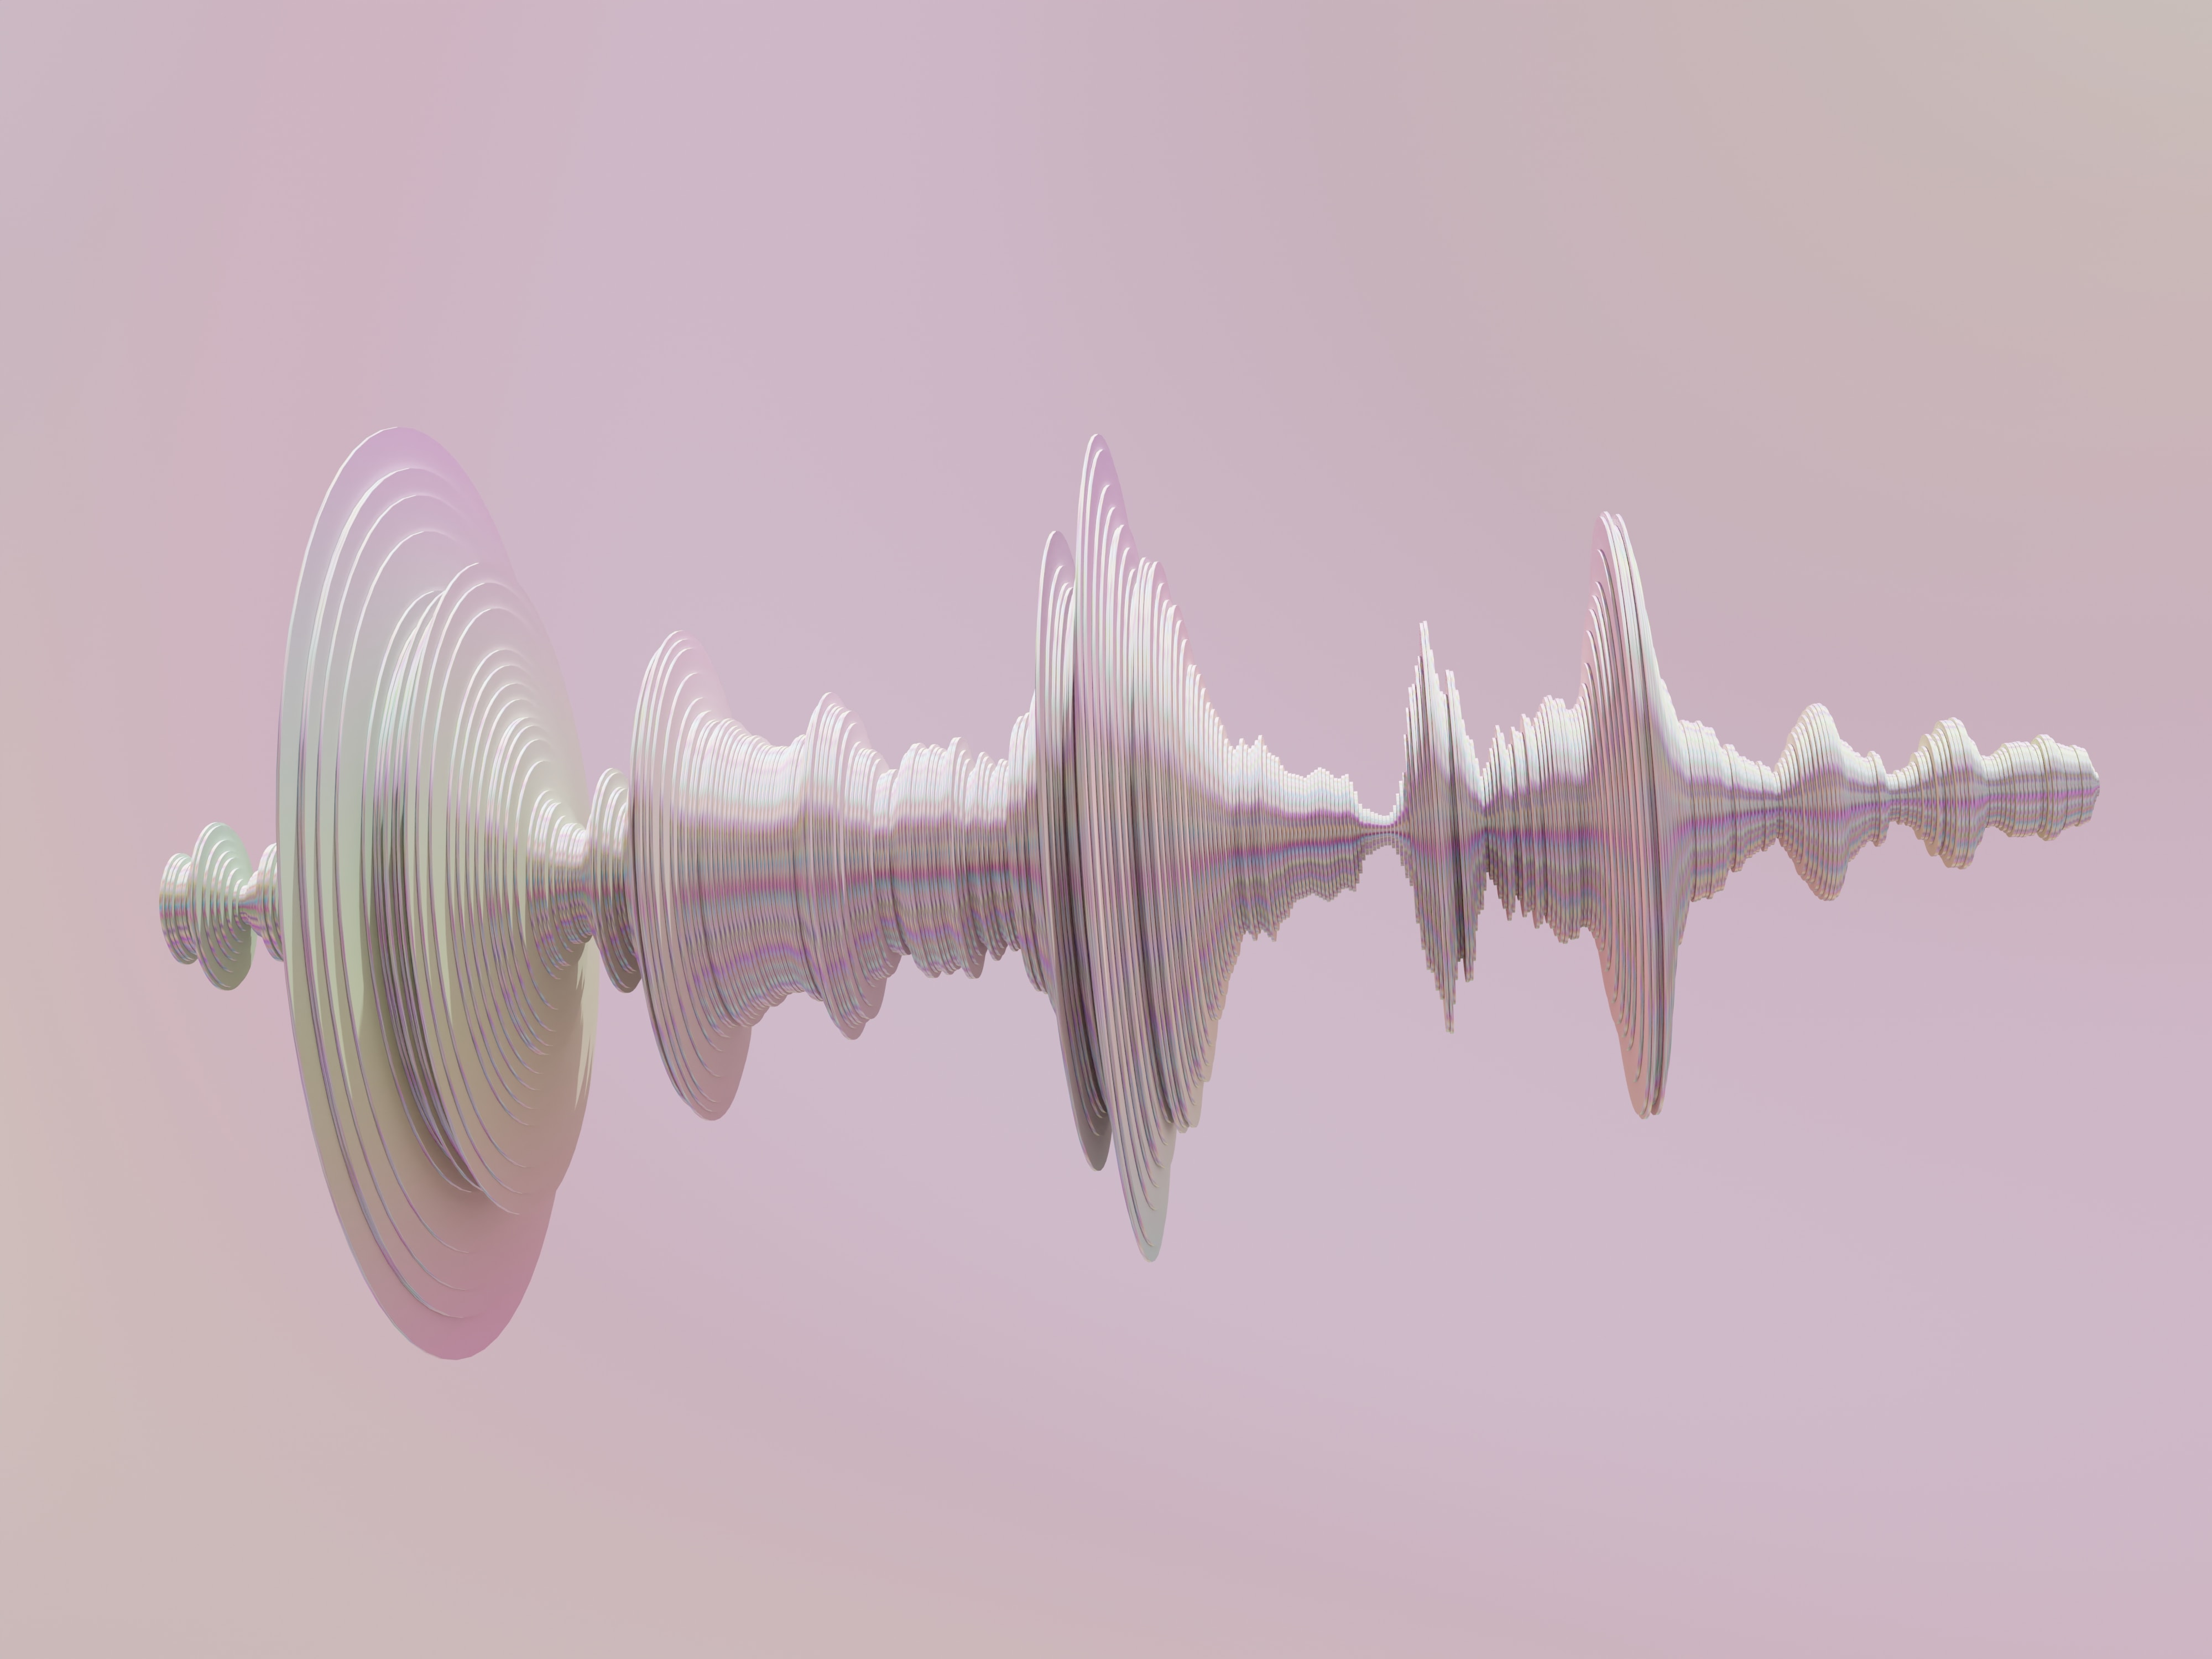 wave-like image on pink background